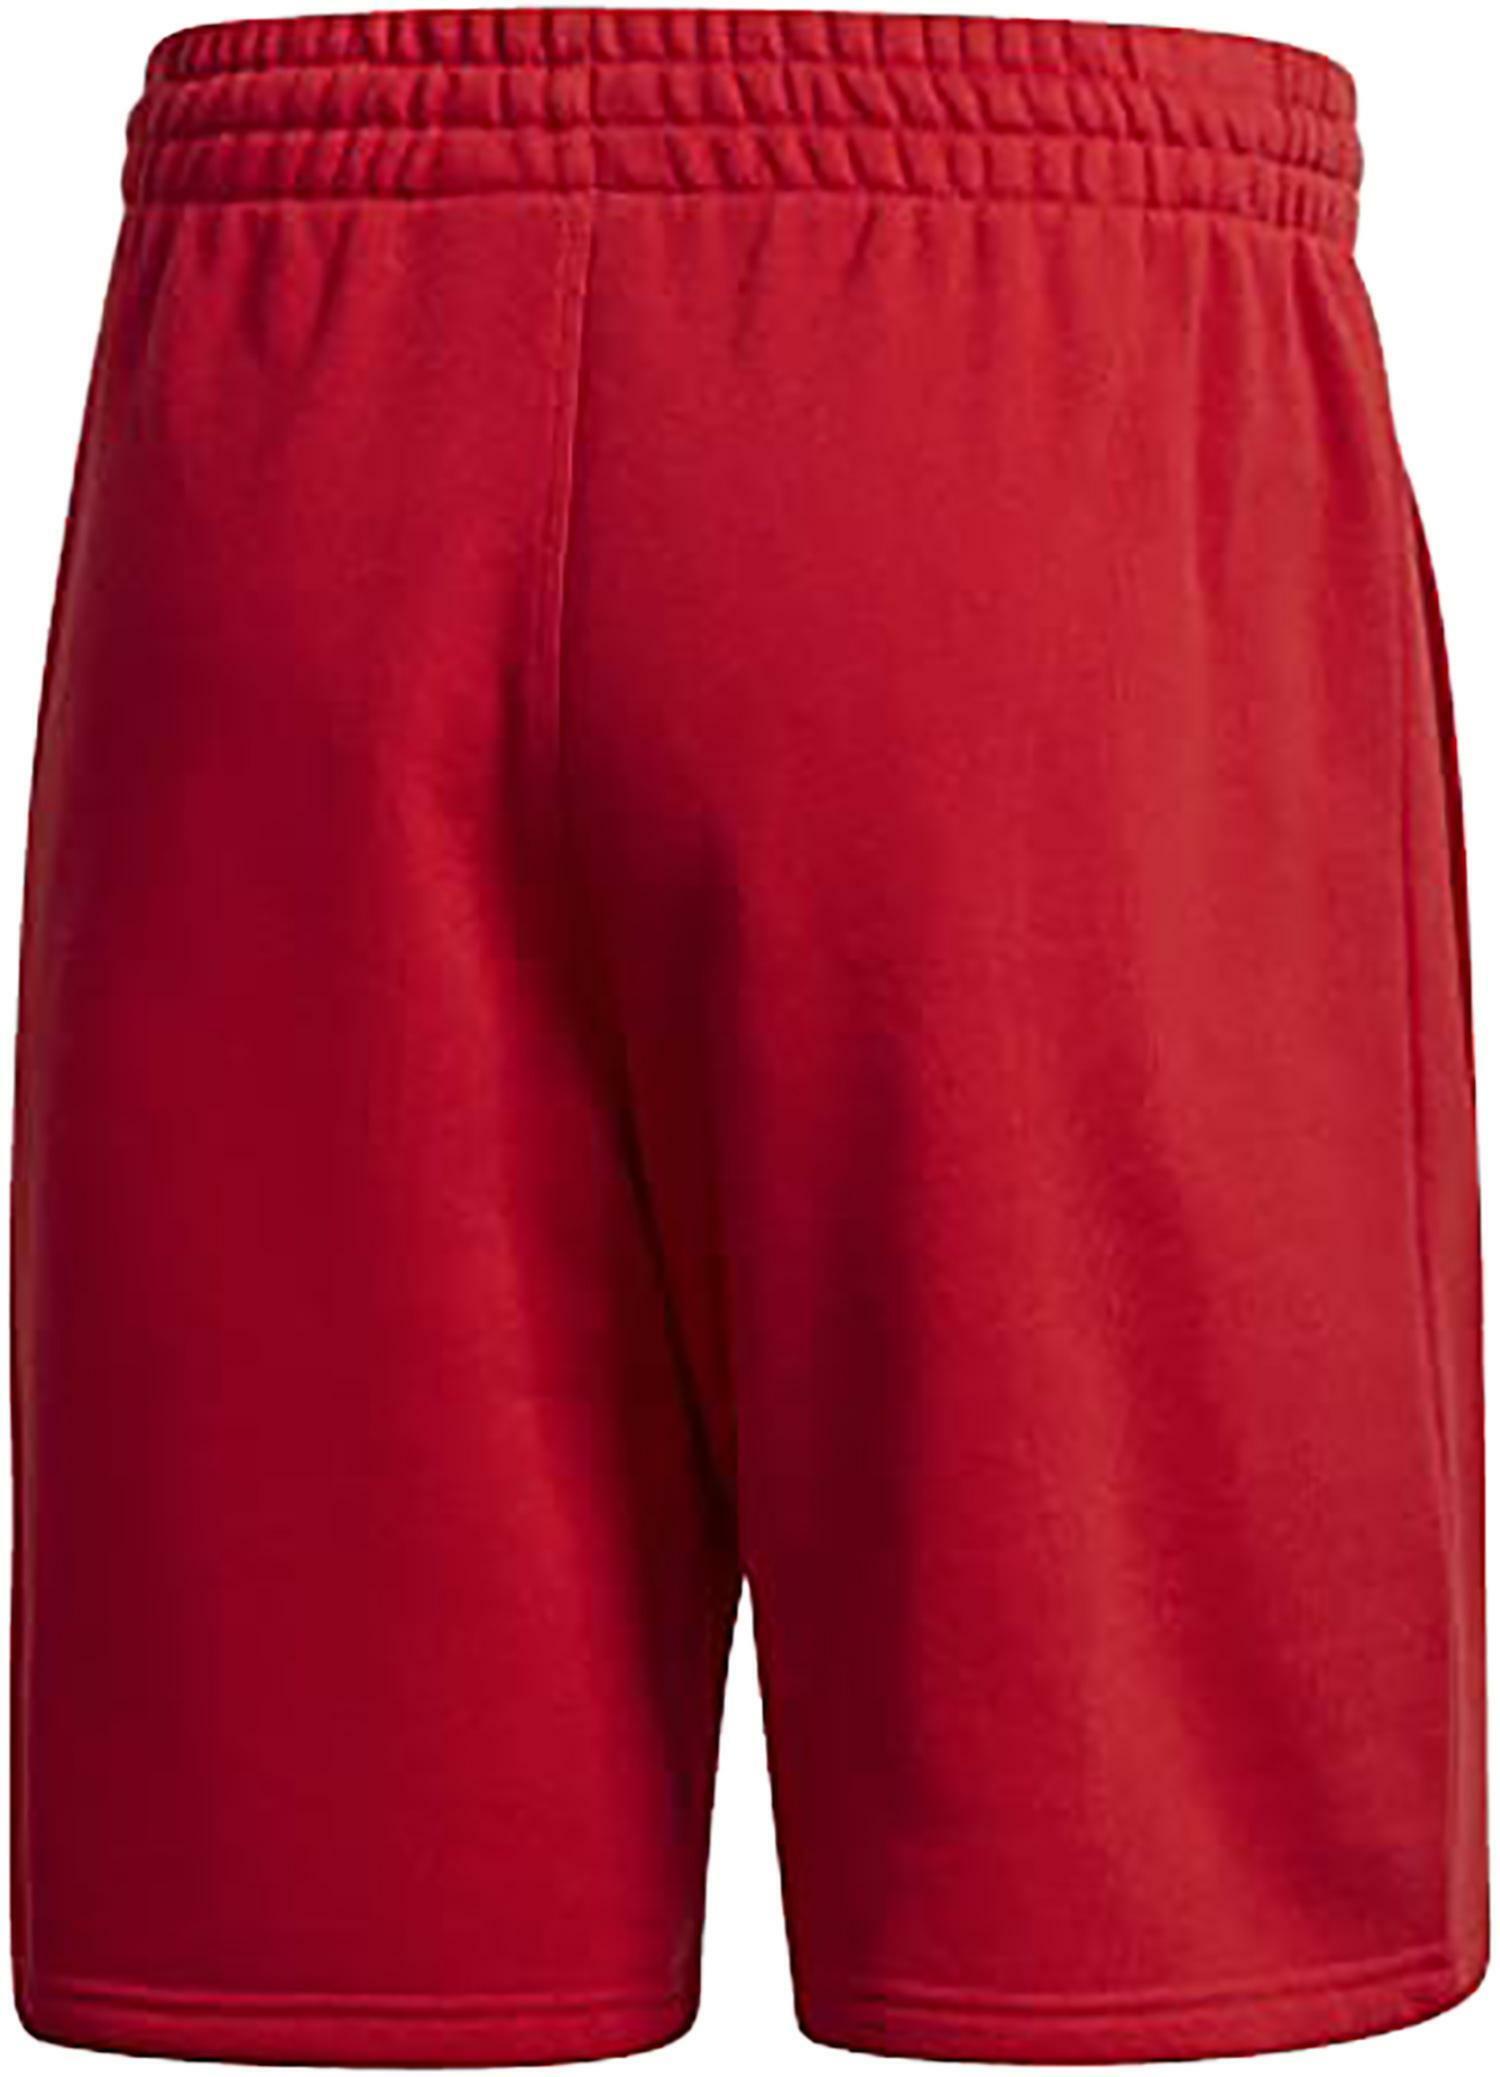 pantaloncini adidas rossi